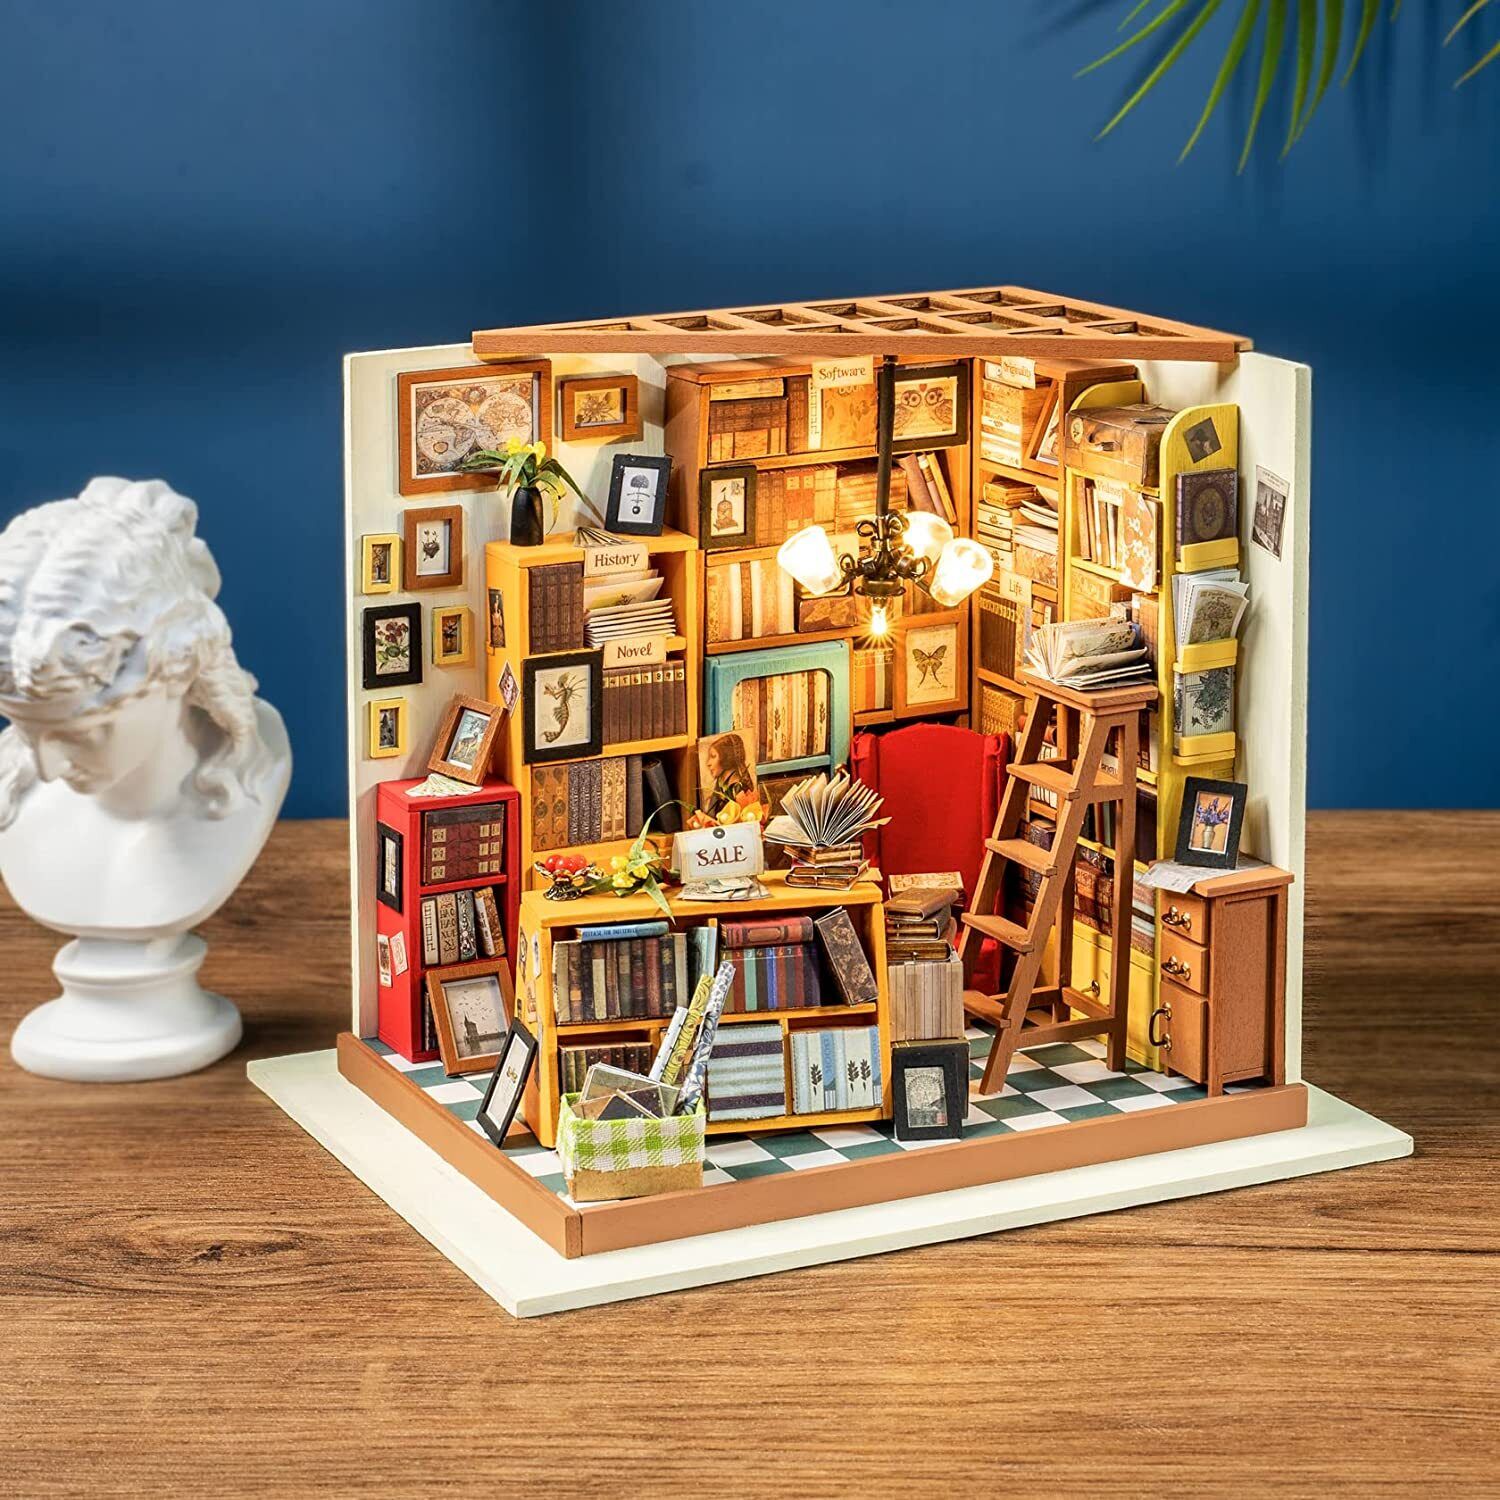 Rolife 1:24 DIY 3D Wooden Dollhouse Miniature Building Kit W/ LED Kids Teen Gift